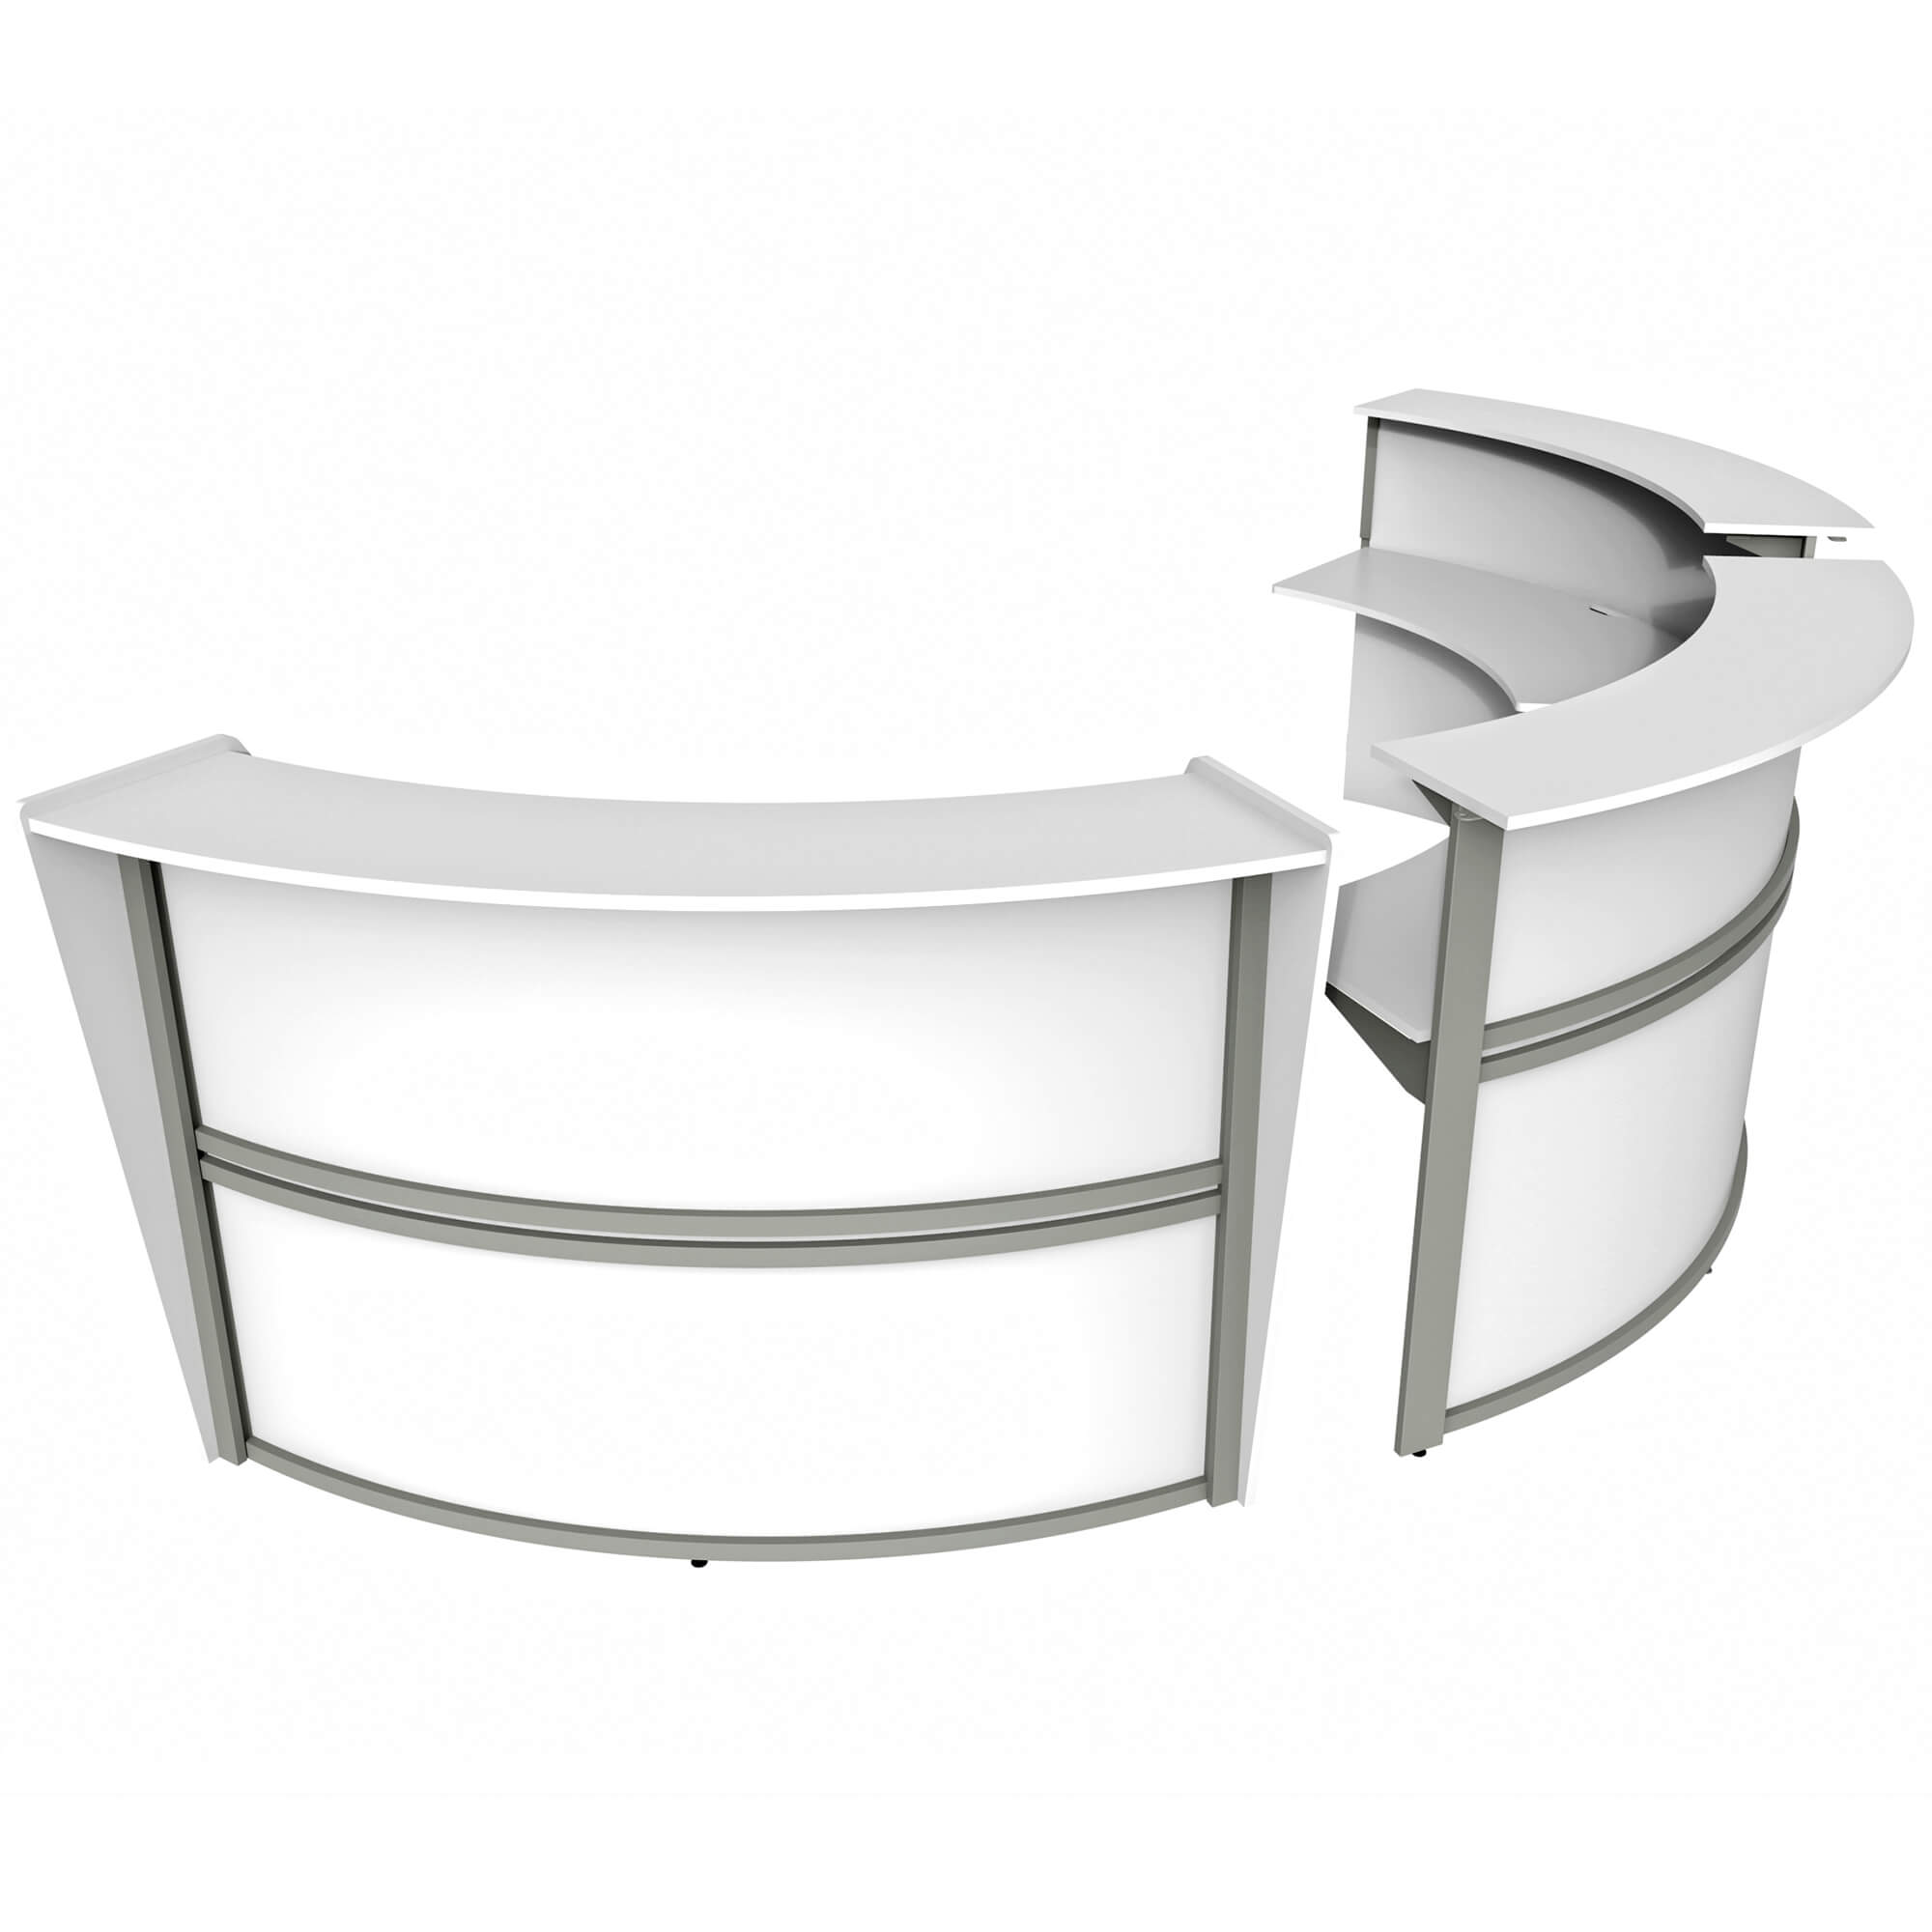 Li1 elegant semi circular reception desk assembly